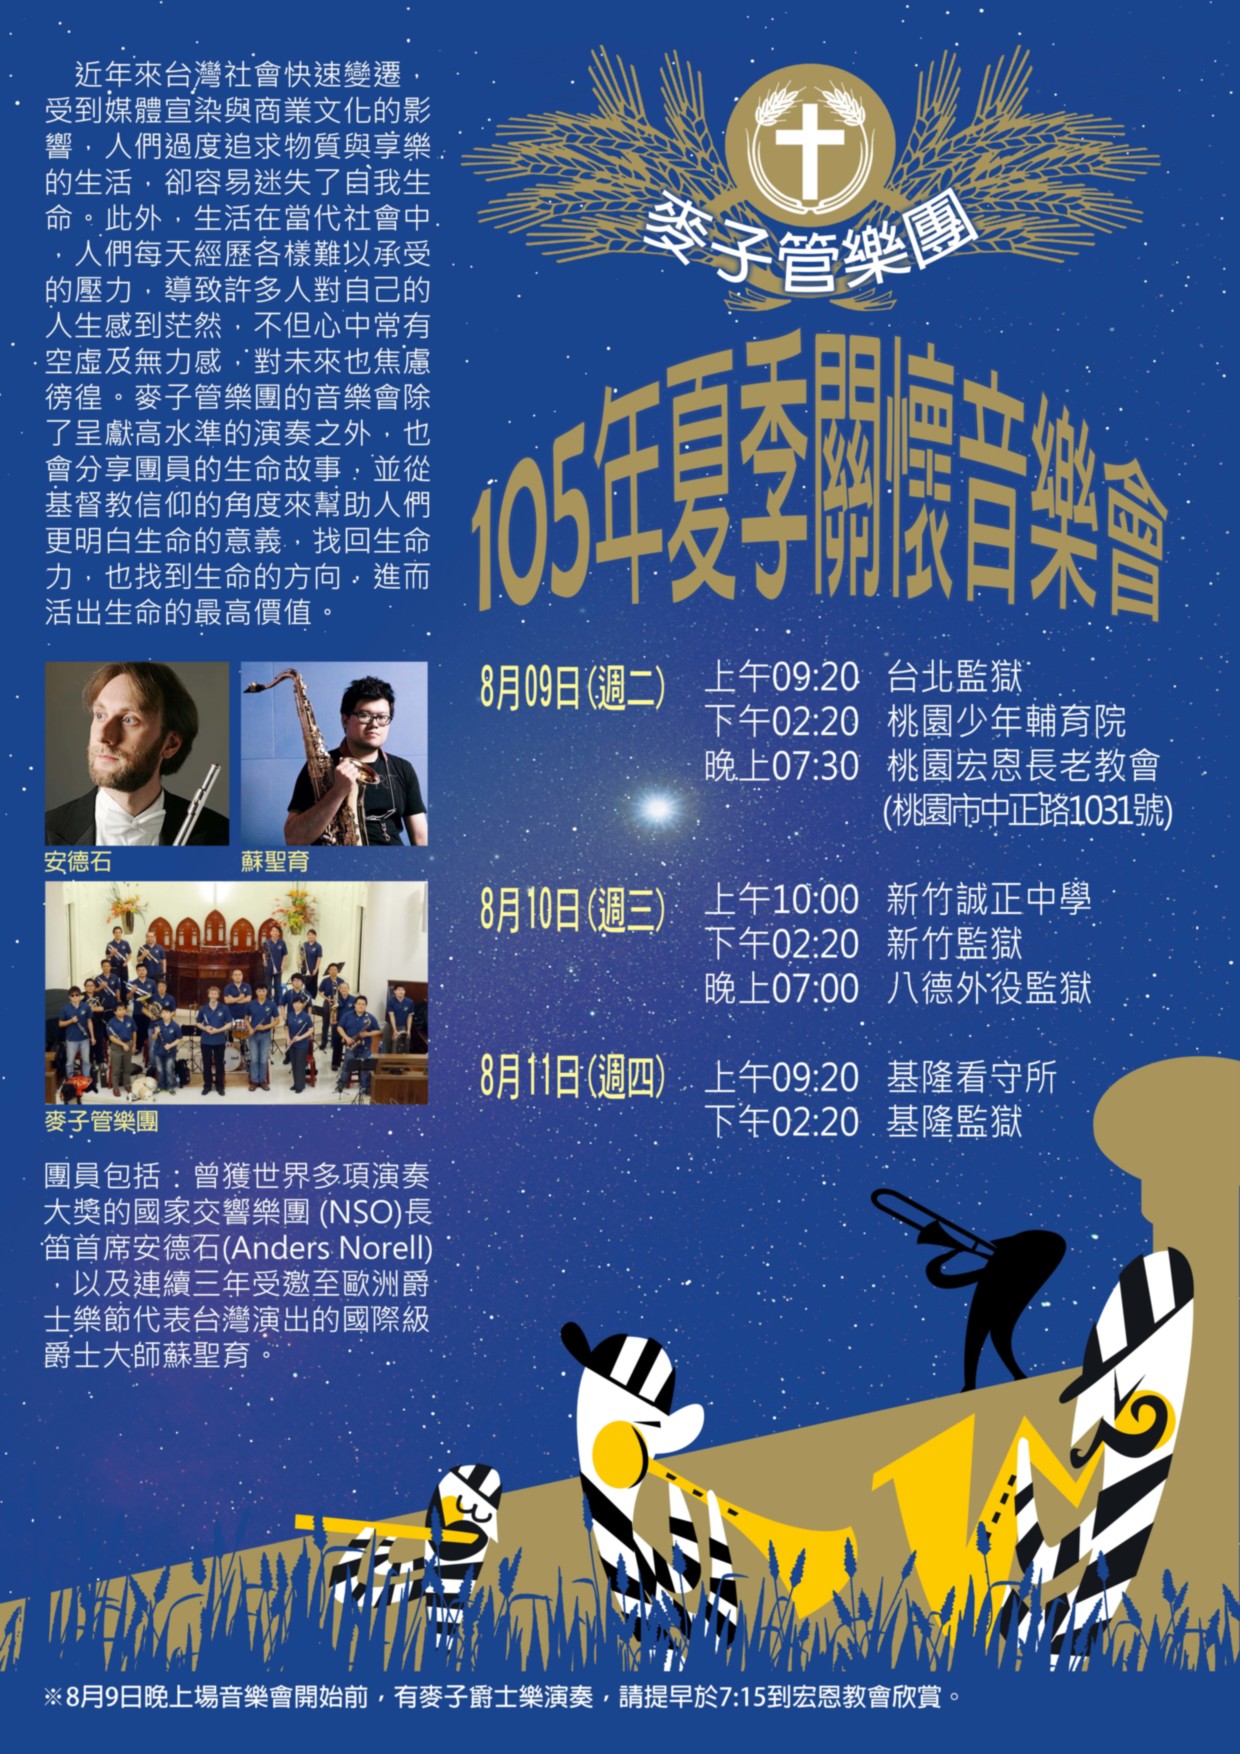 2016 Concert Poster